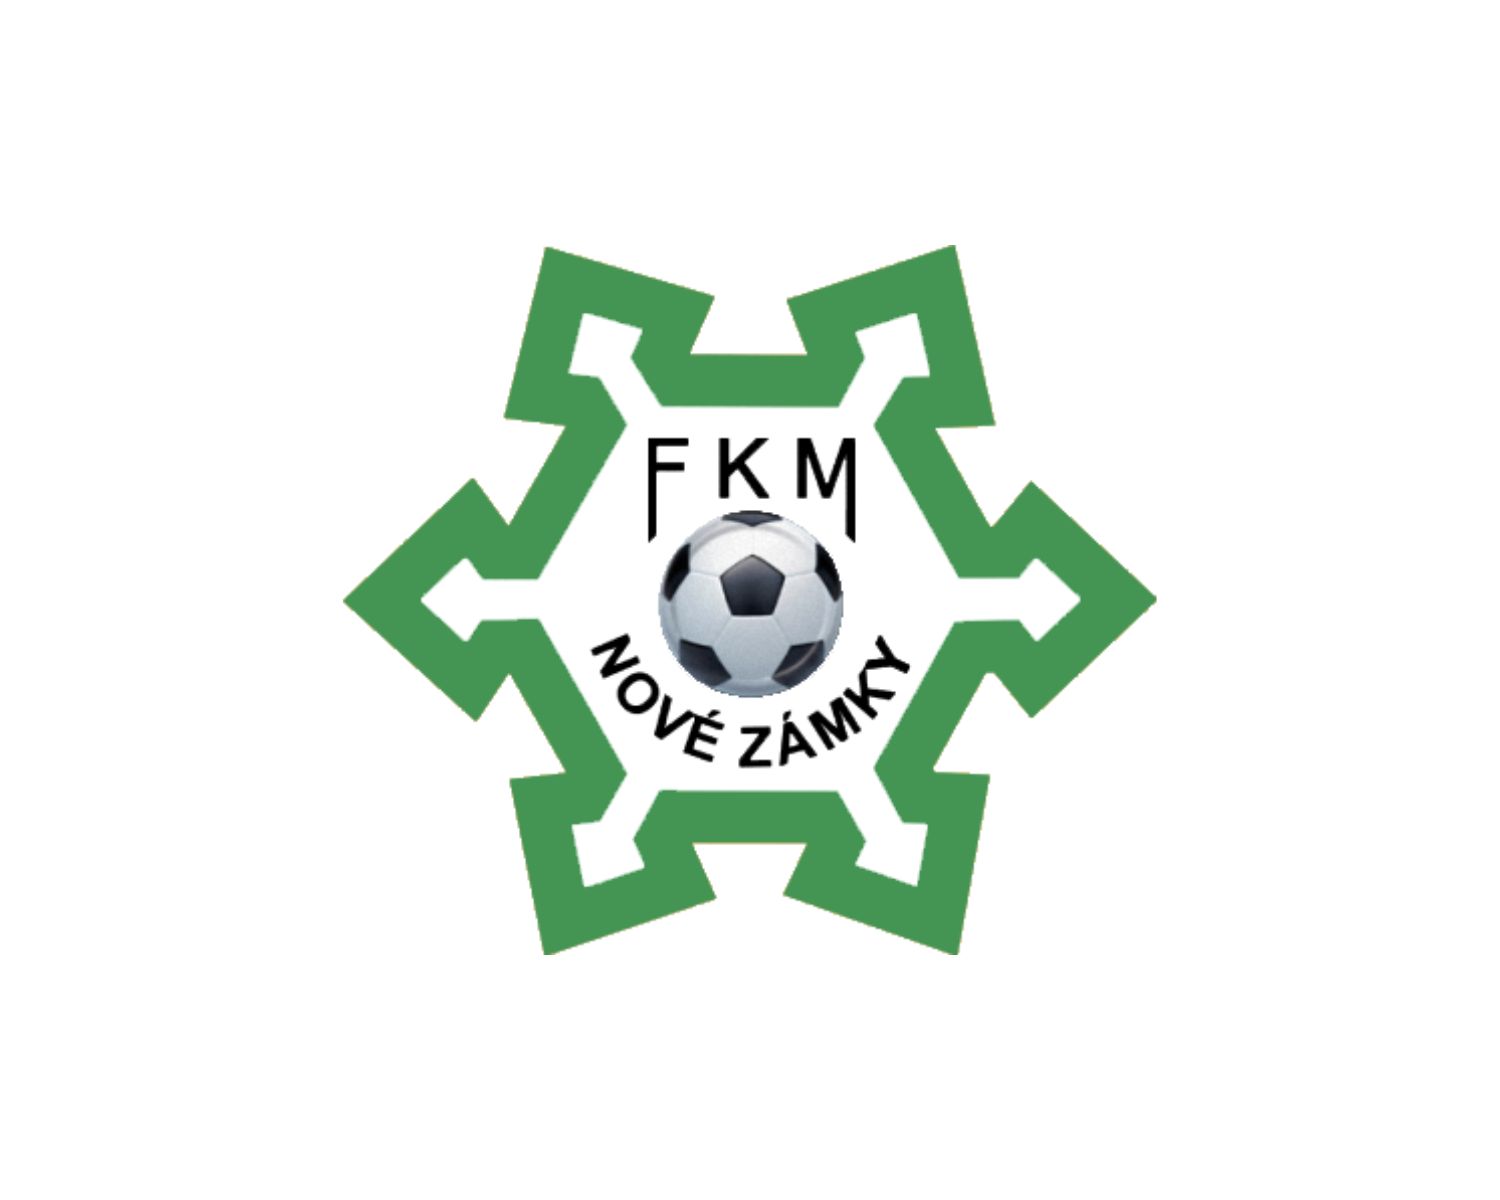 fkm-nove-zamky-15-football-club-facts